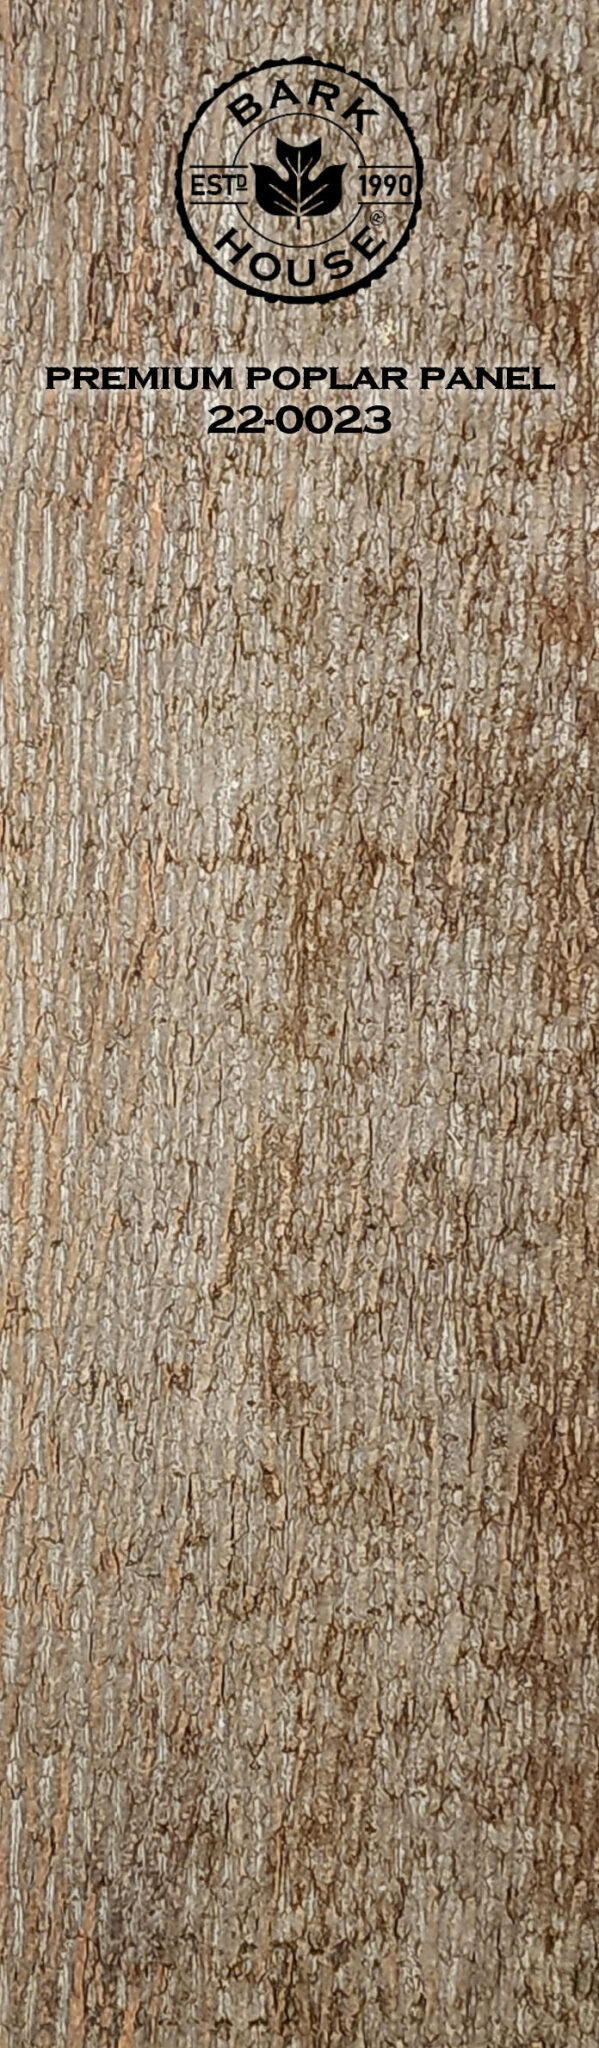 Bark House poplar bark panel SKU POPP-PRE-22-0023